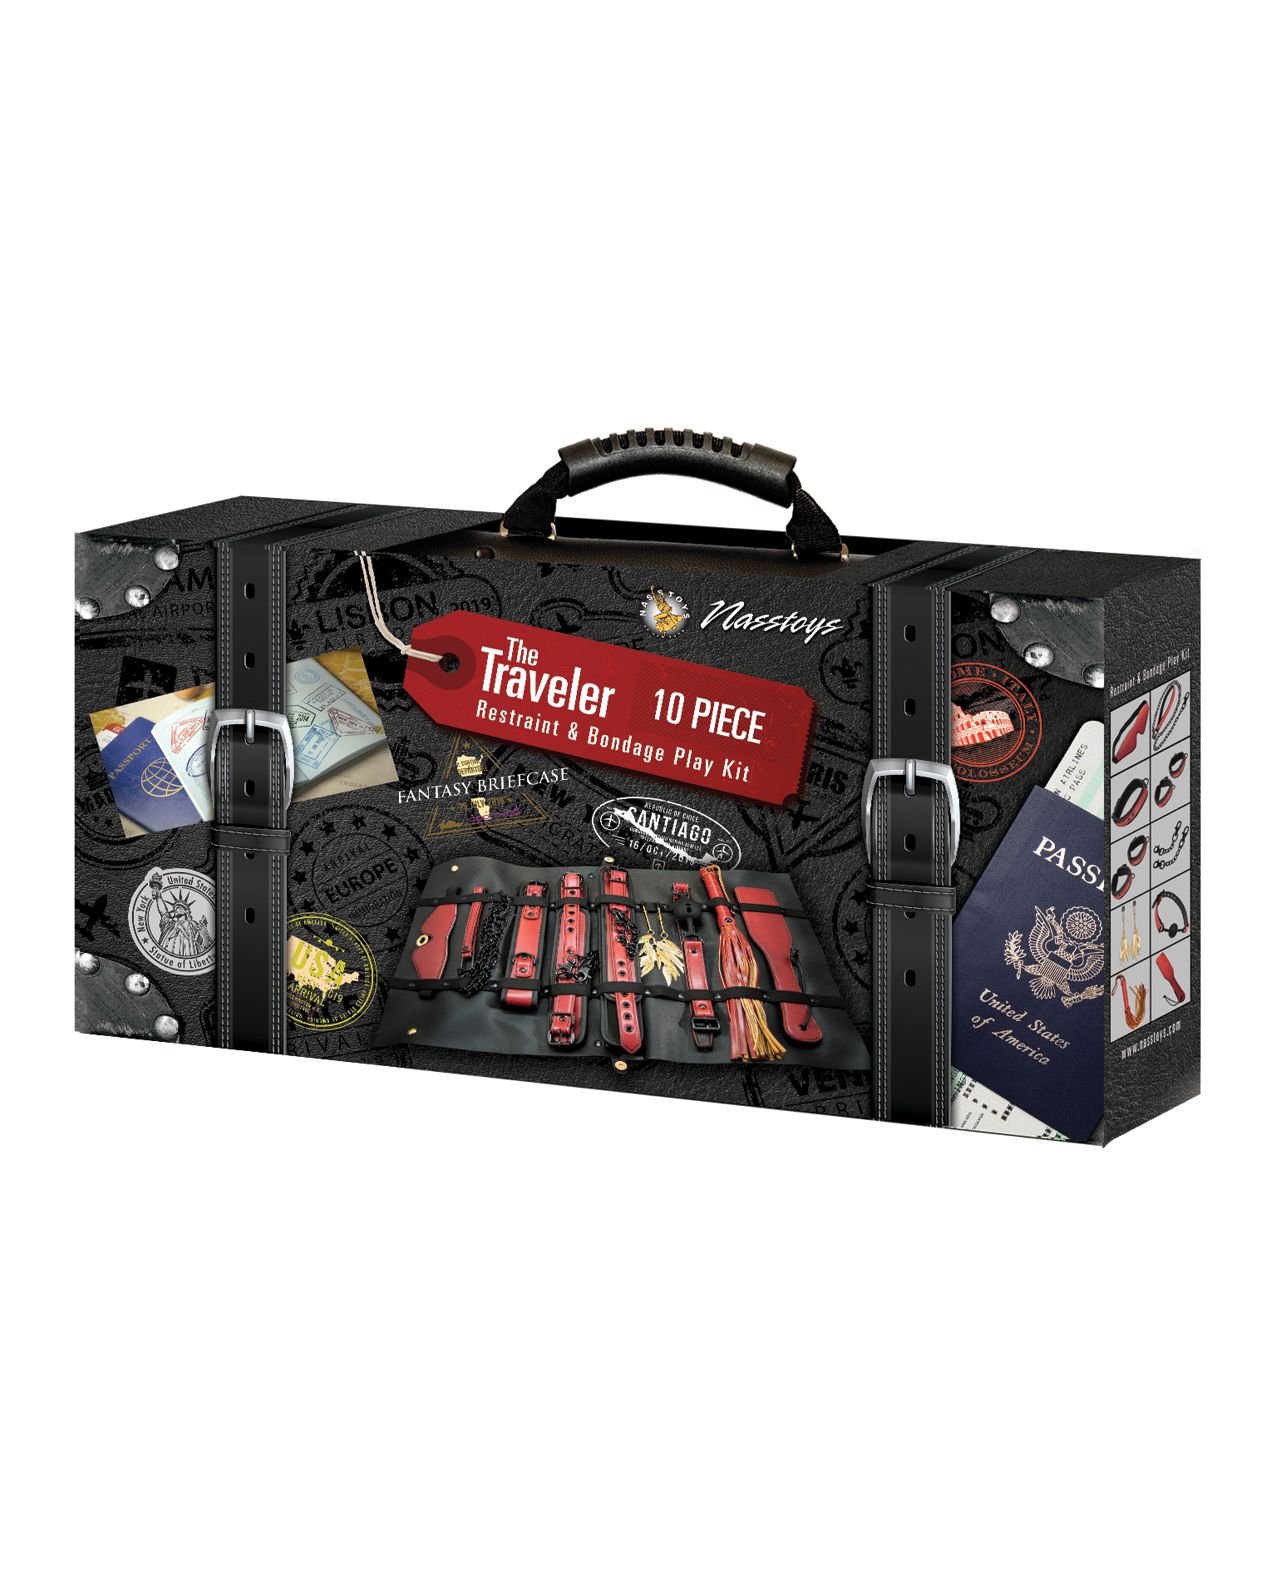 The Ultimate Fantasy Travel Briefcase Restraint & Bondage Play Kit Shipmysextoys